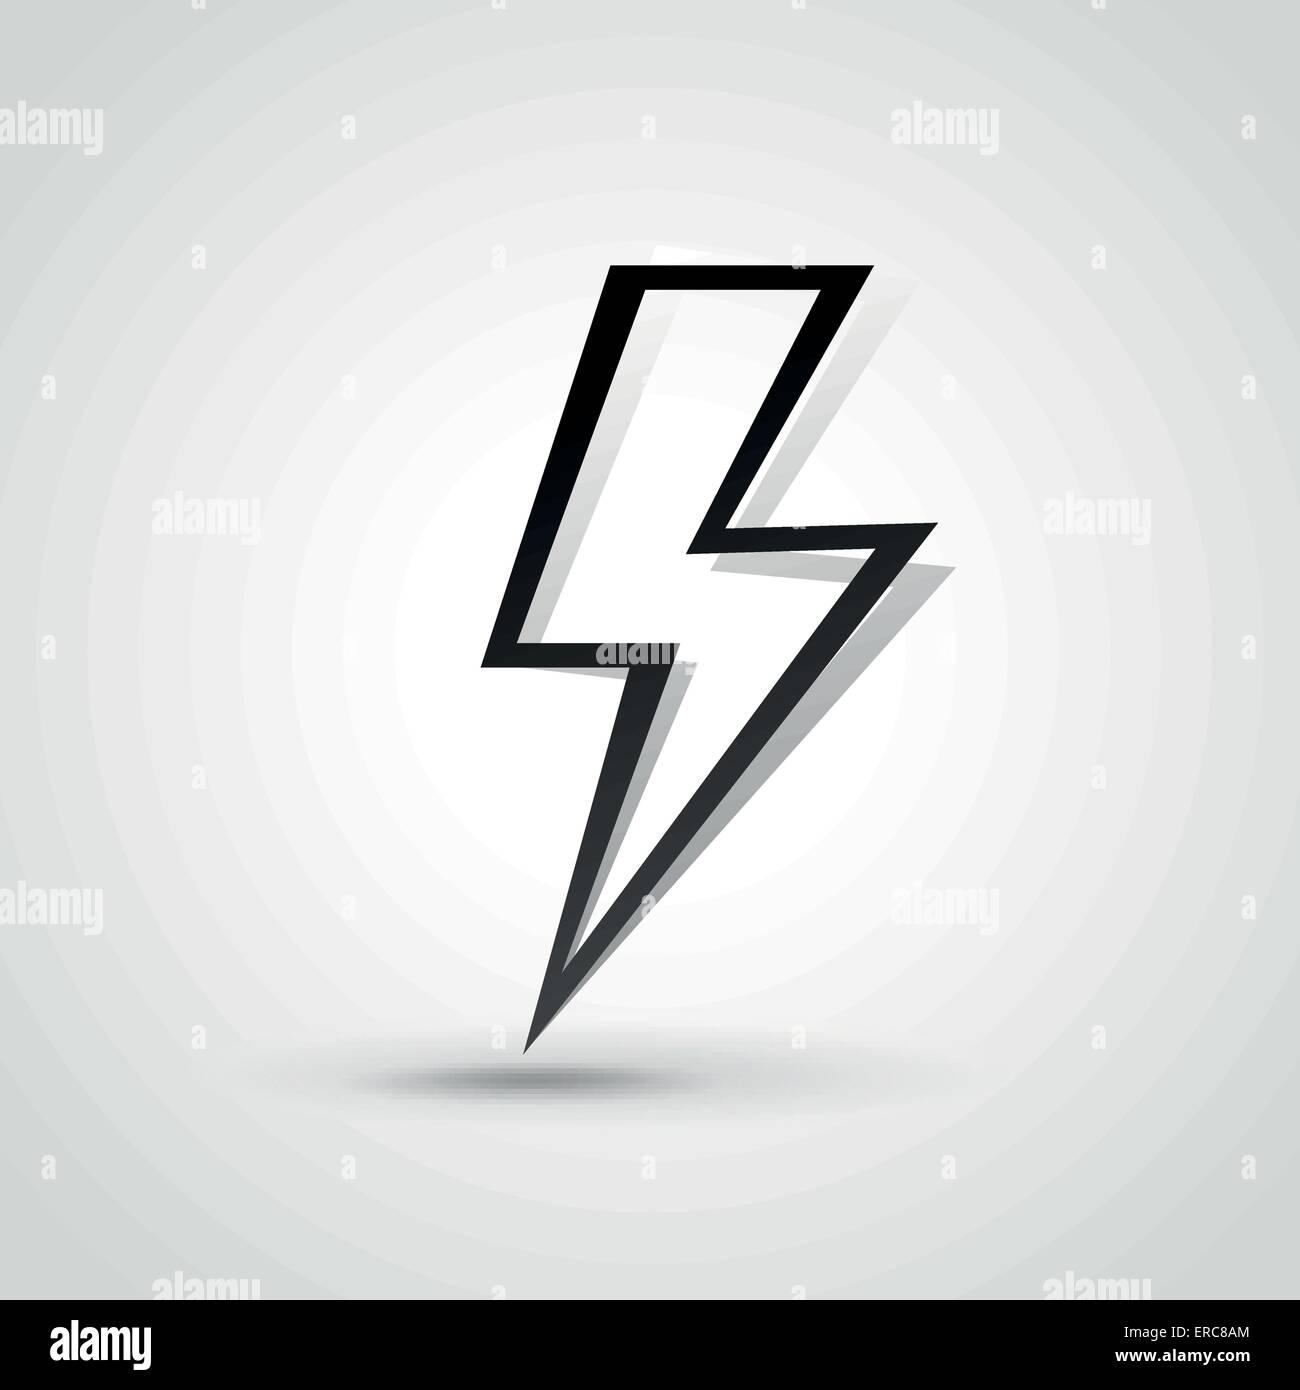 Vector illustration of lightning bolt icon concept Stock Vector